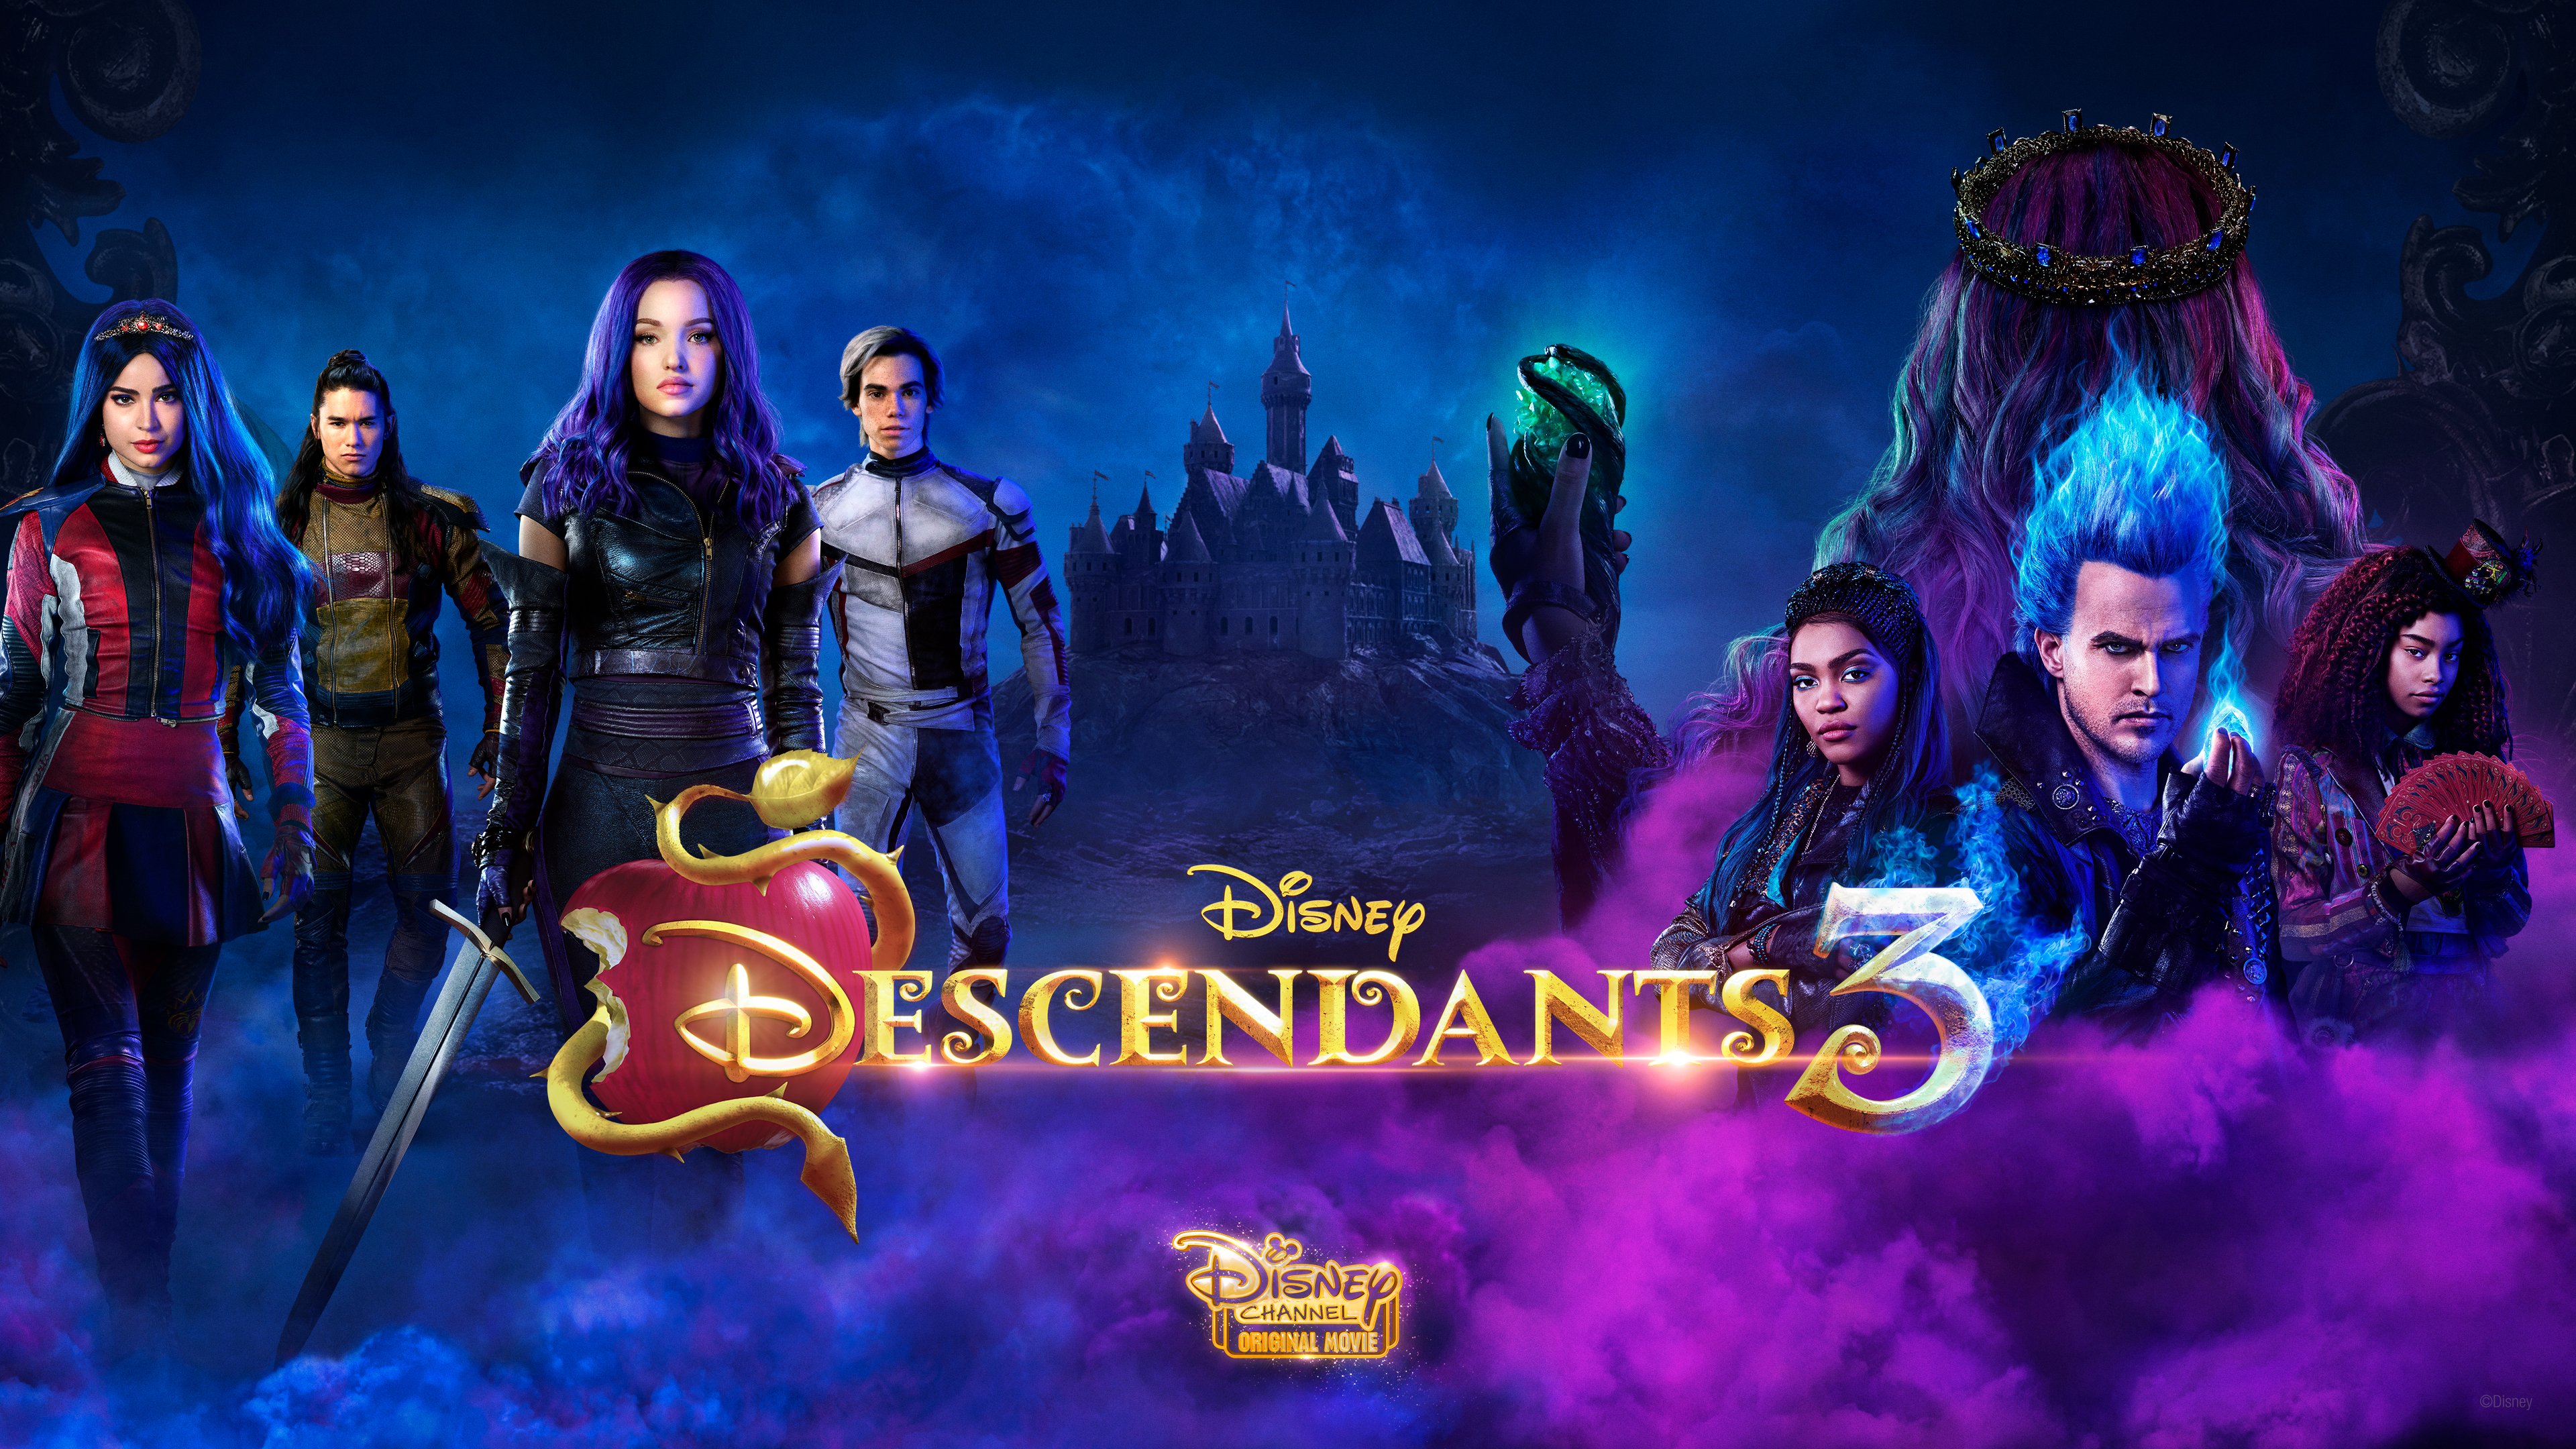 Disney's Descendants 3 News, Cast, Trailer, Release Date, and Spoilers